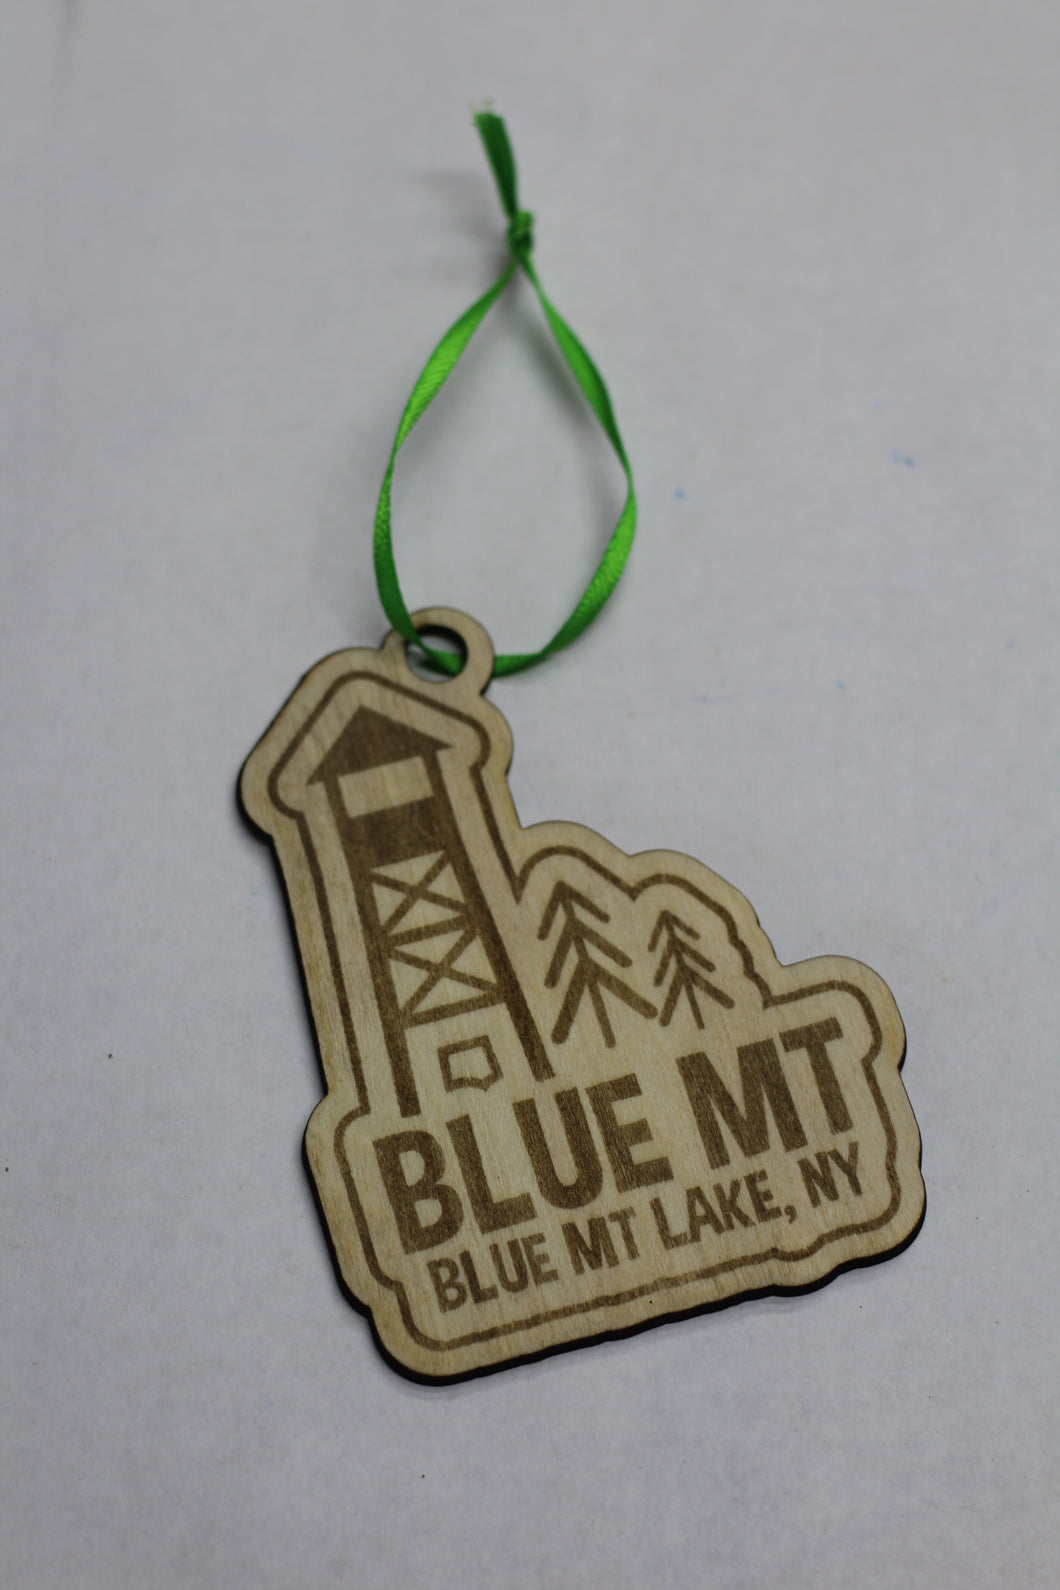 Blue MT Firetower Ornament